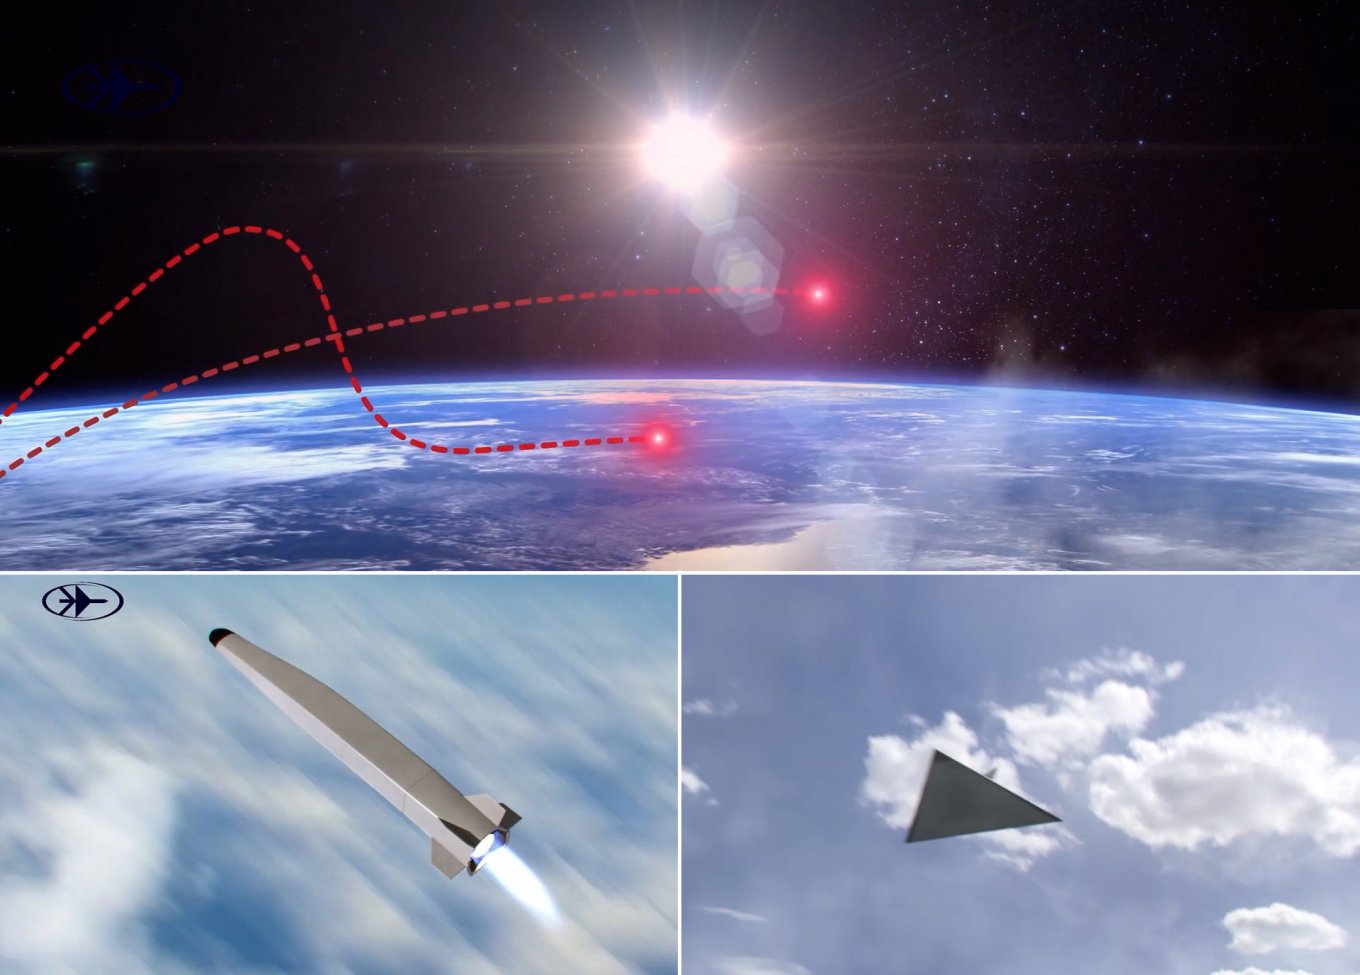 Rafael unveils 'Sky Sonic' hypersonic missile interceptor